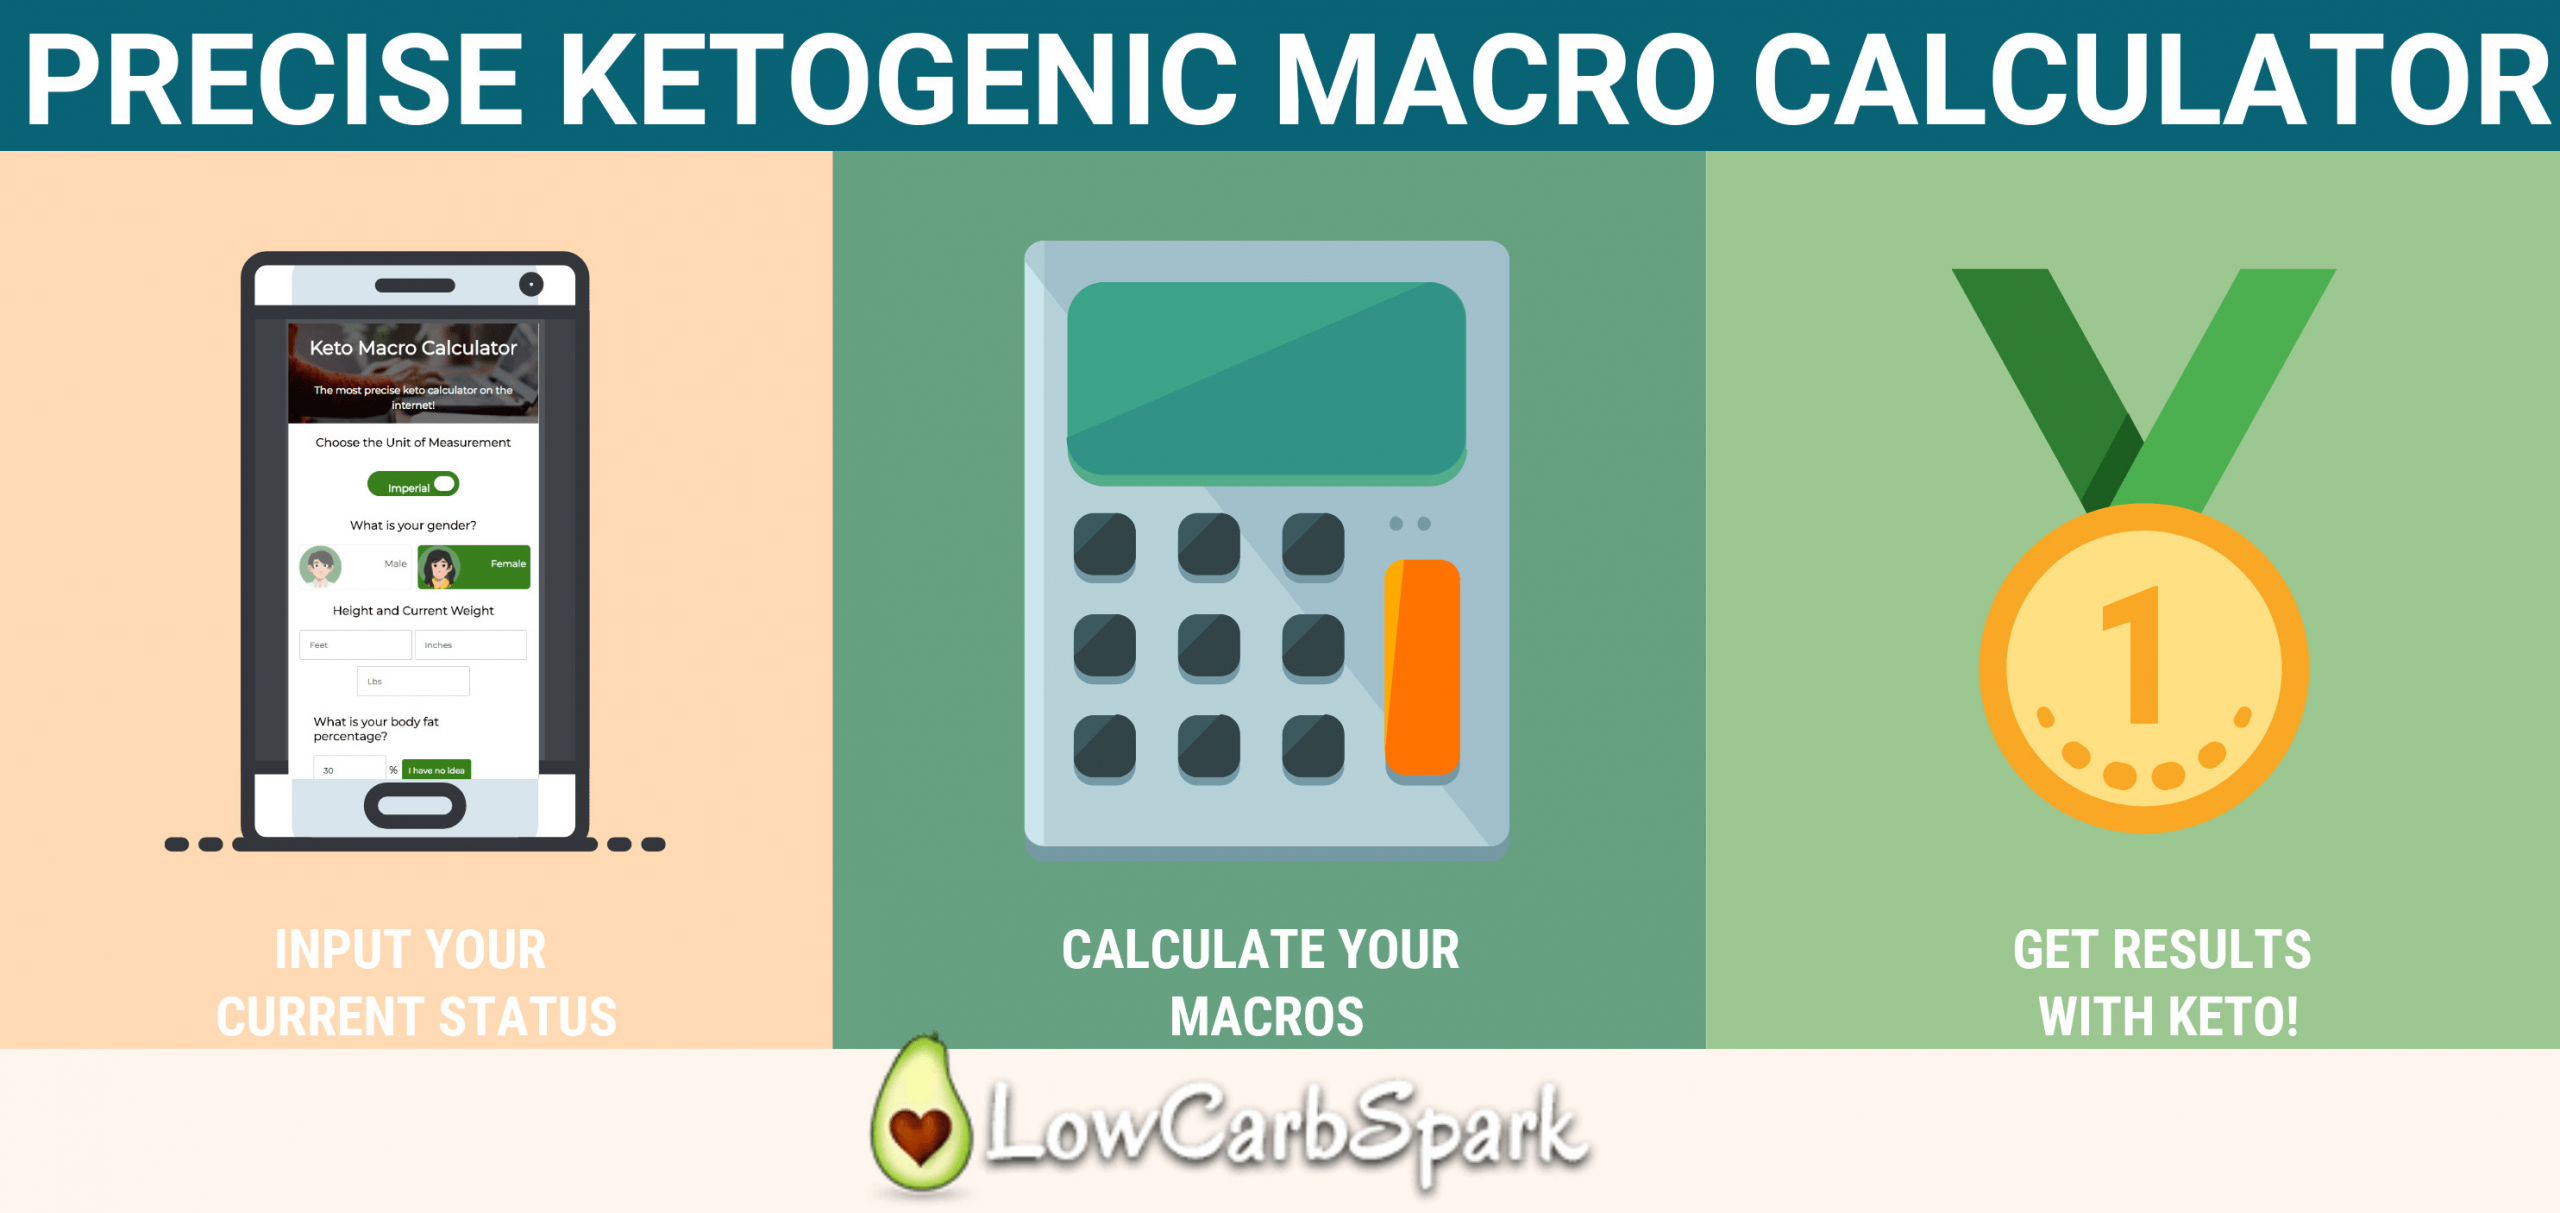 Keto Diet Macros Calculator
 Keto Calculator The Most Precise & Easy Way to Calculate